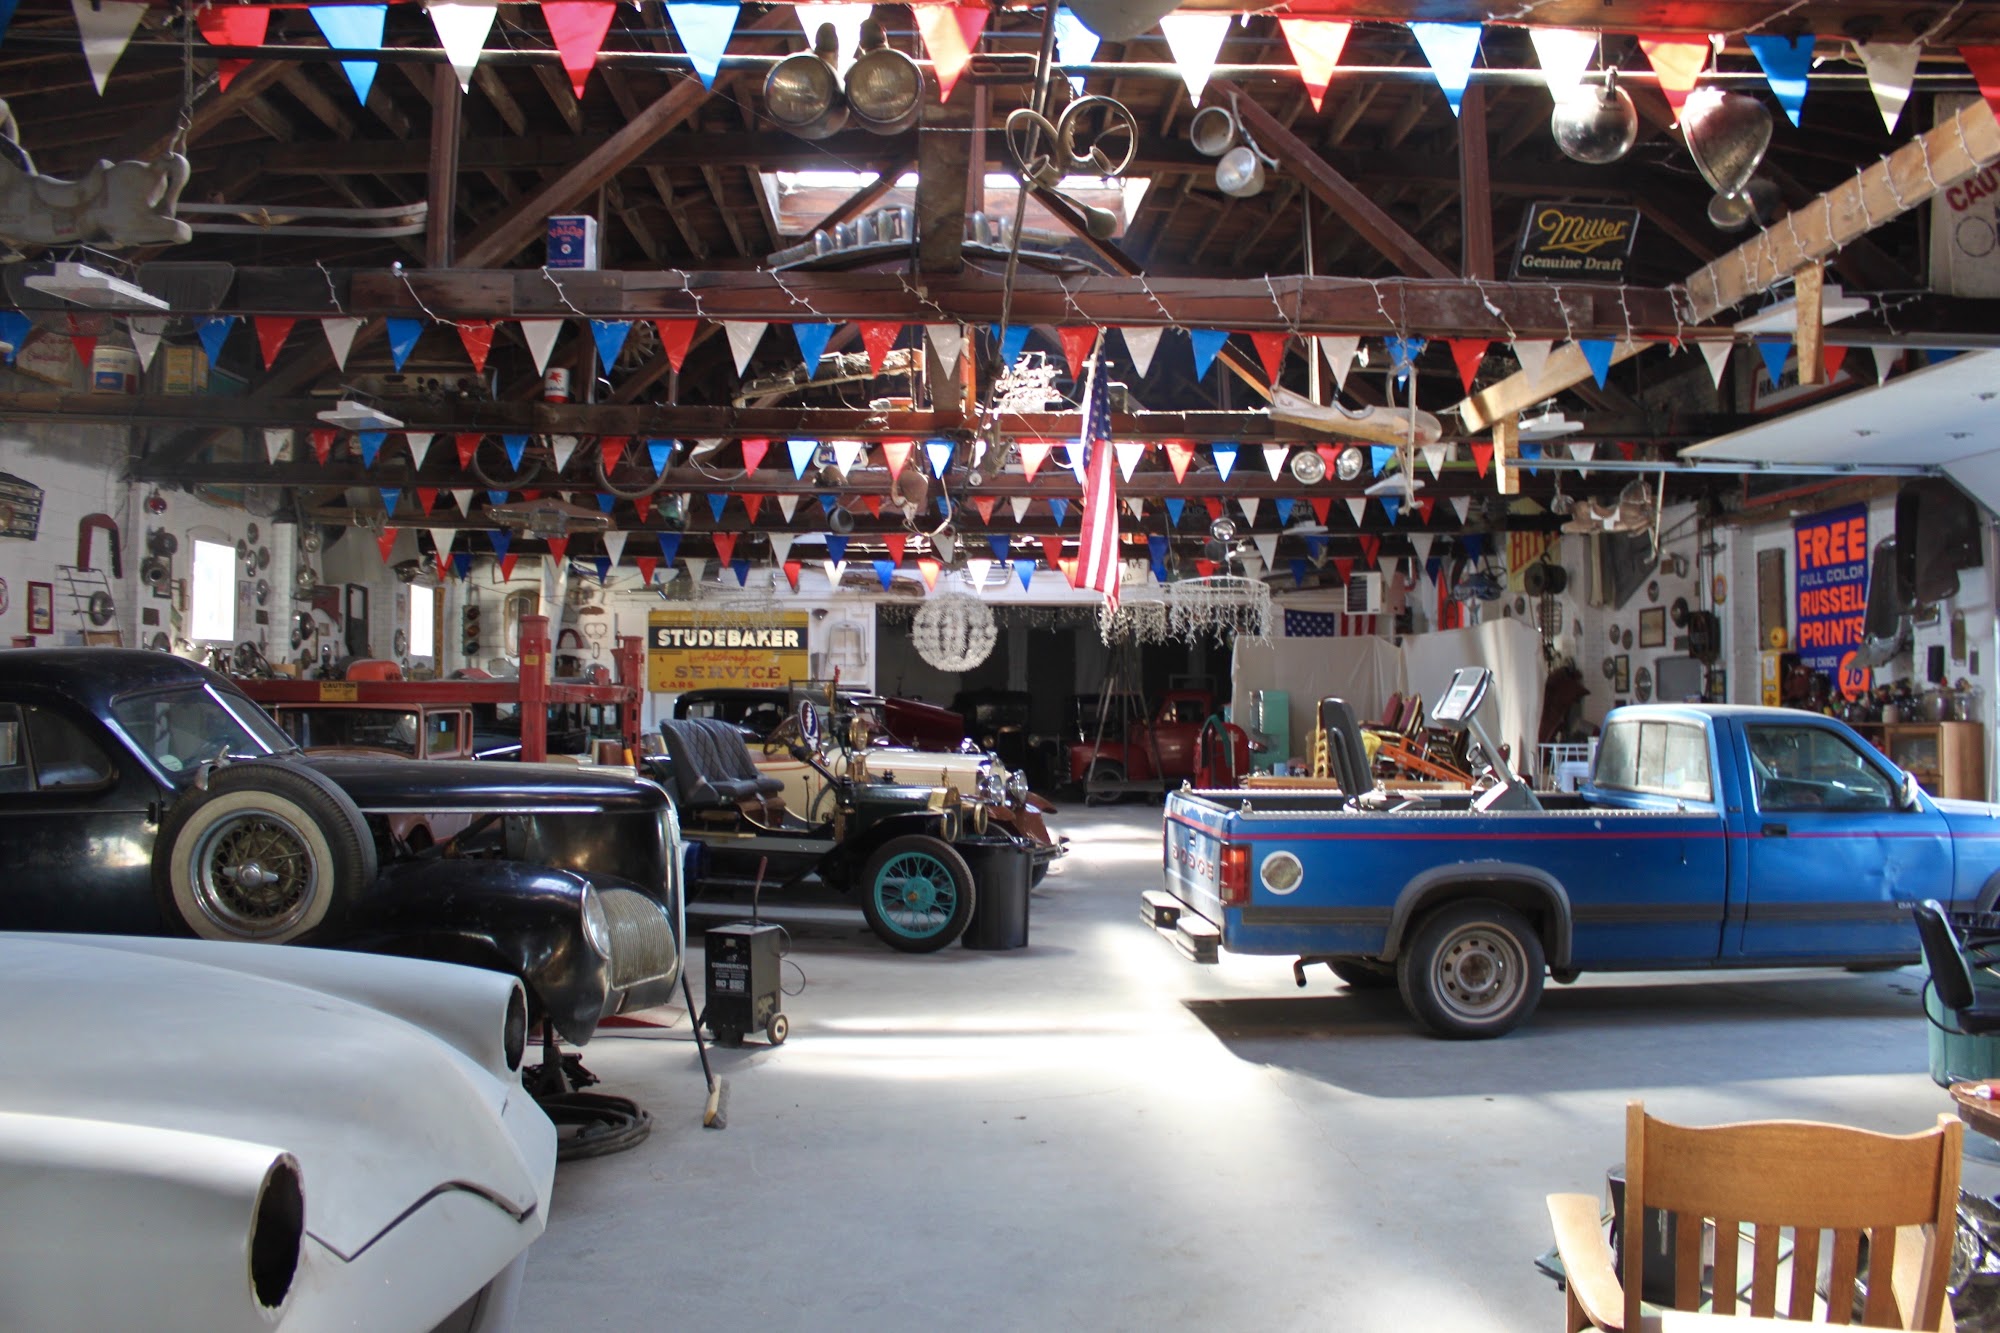 The Studebaker Garage